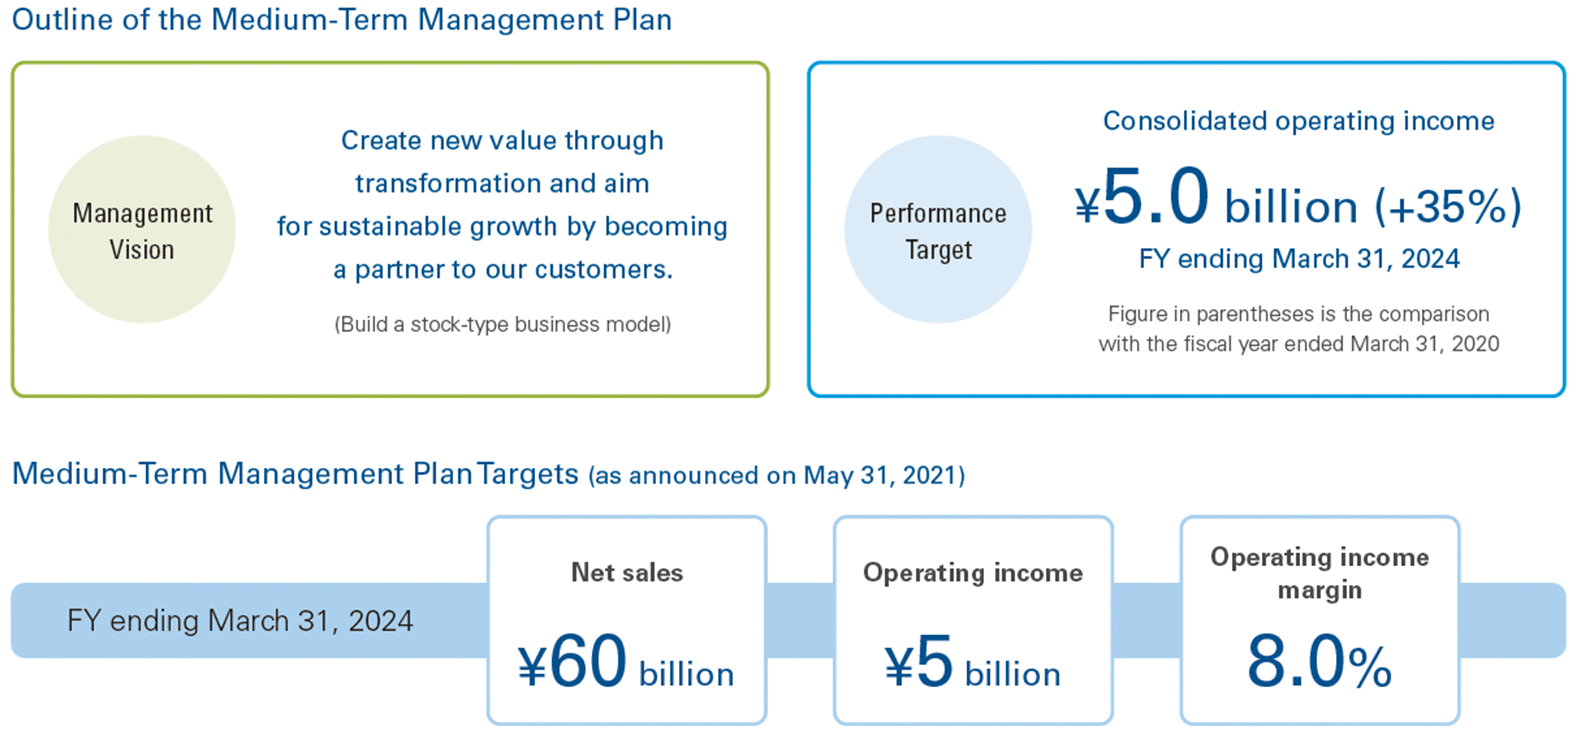 Progress of the Medium-Term Management Plan